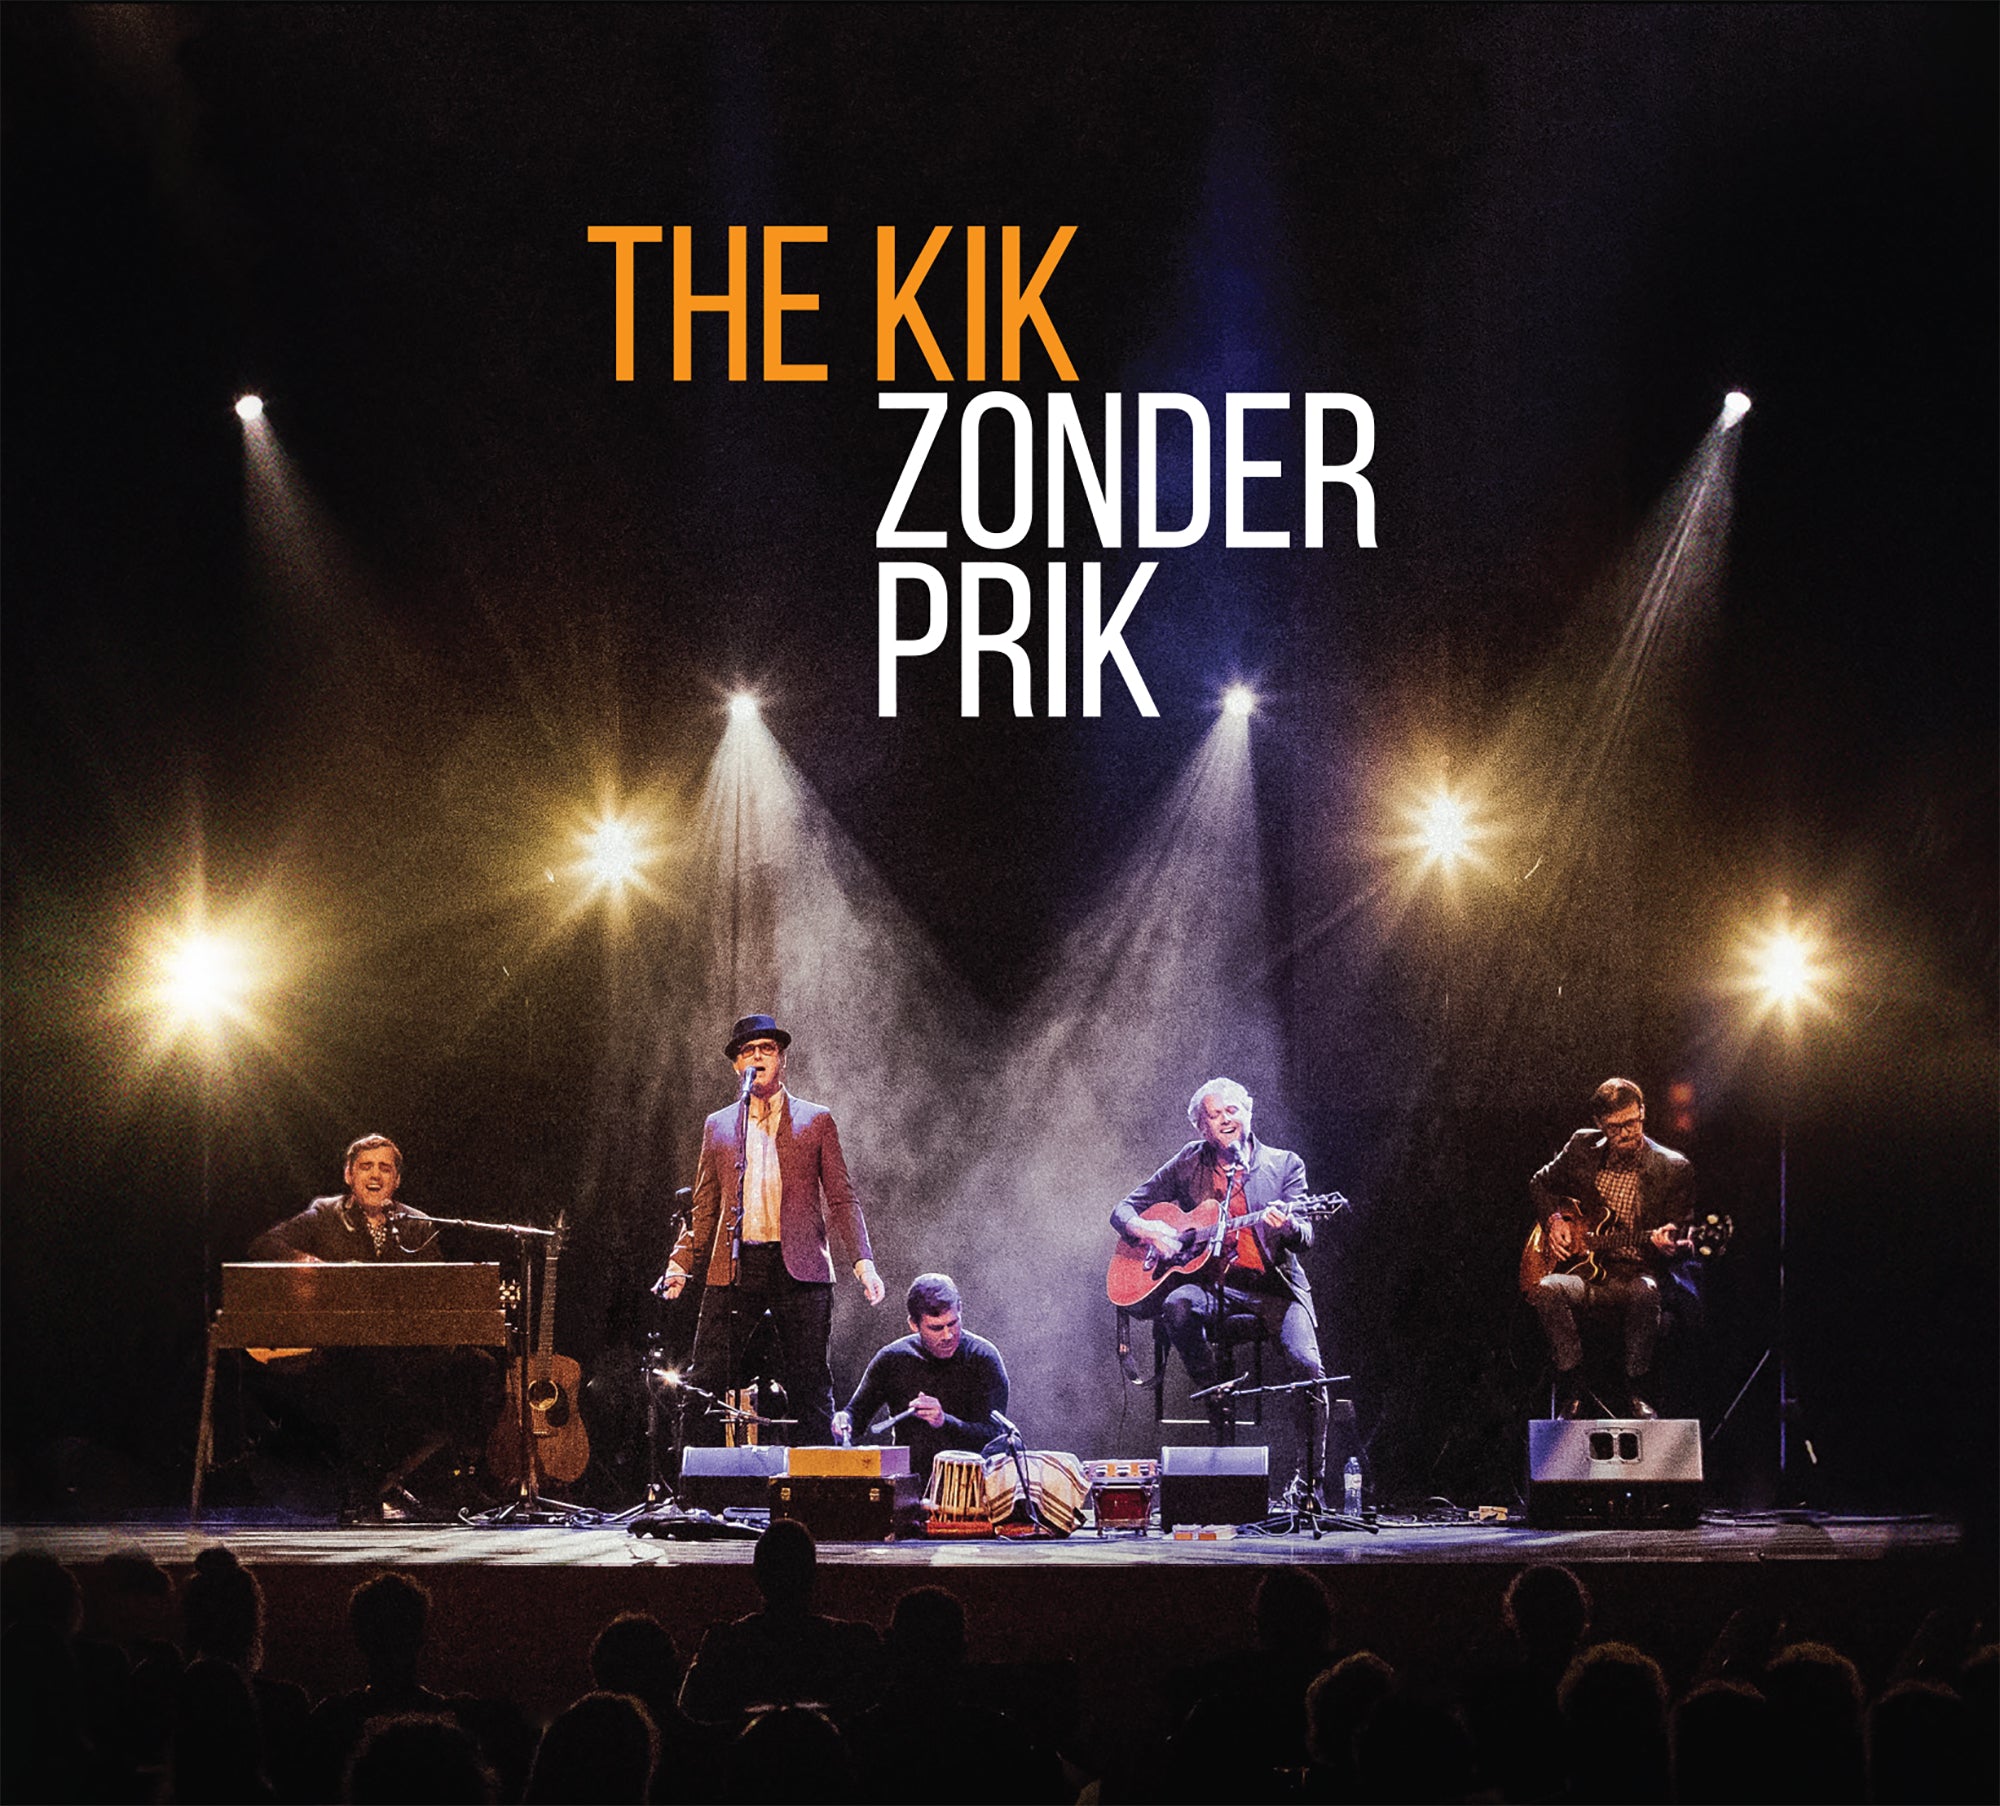 The Kik - Zonder Prik